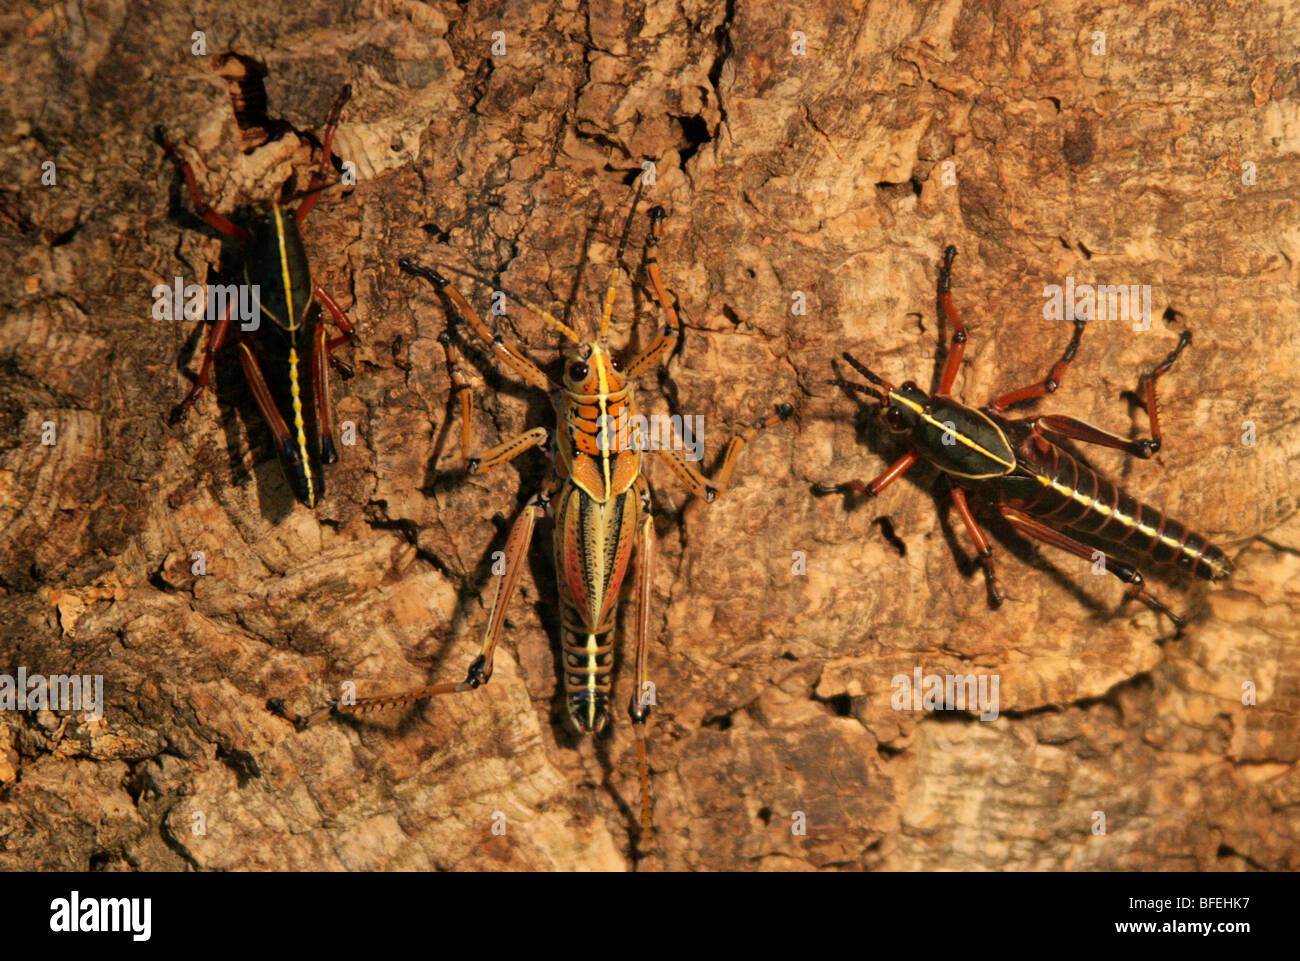 Eastern Lubber Grasshoppers, Romalea guttata (Romalea microptera) Romaleidae, Orthoptera, South Eastern USA. Stock Photo